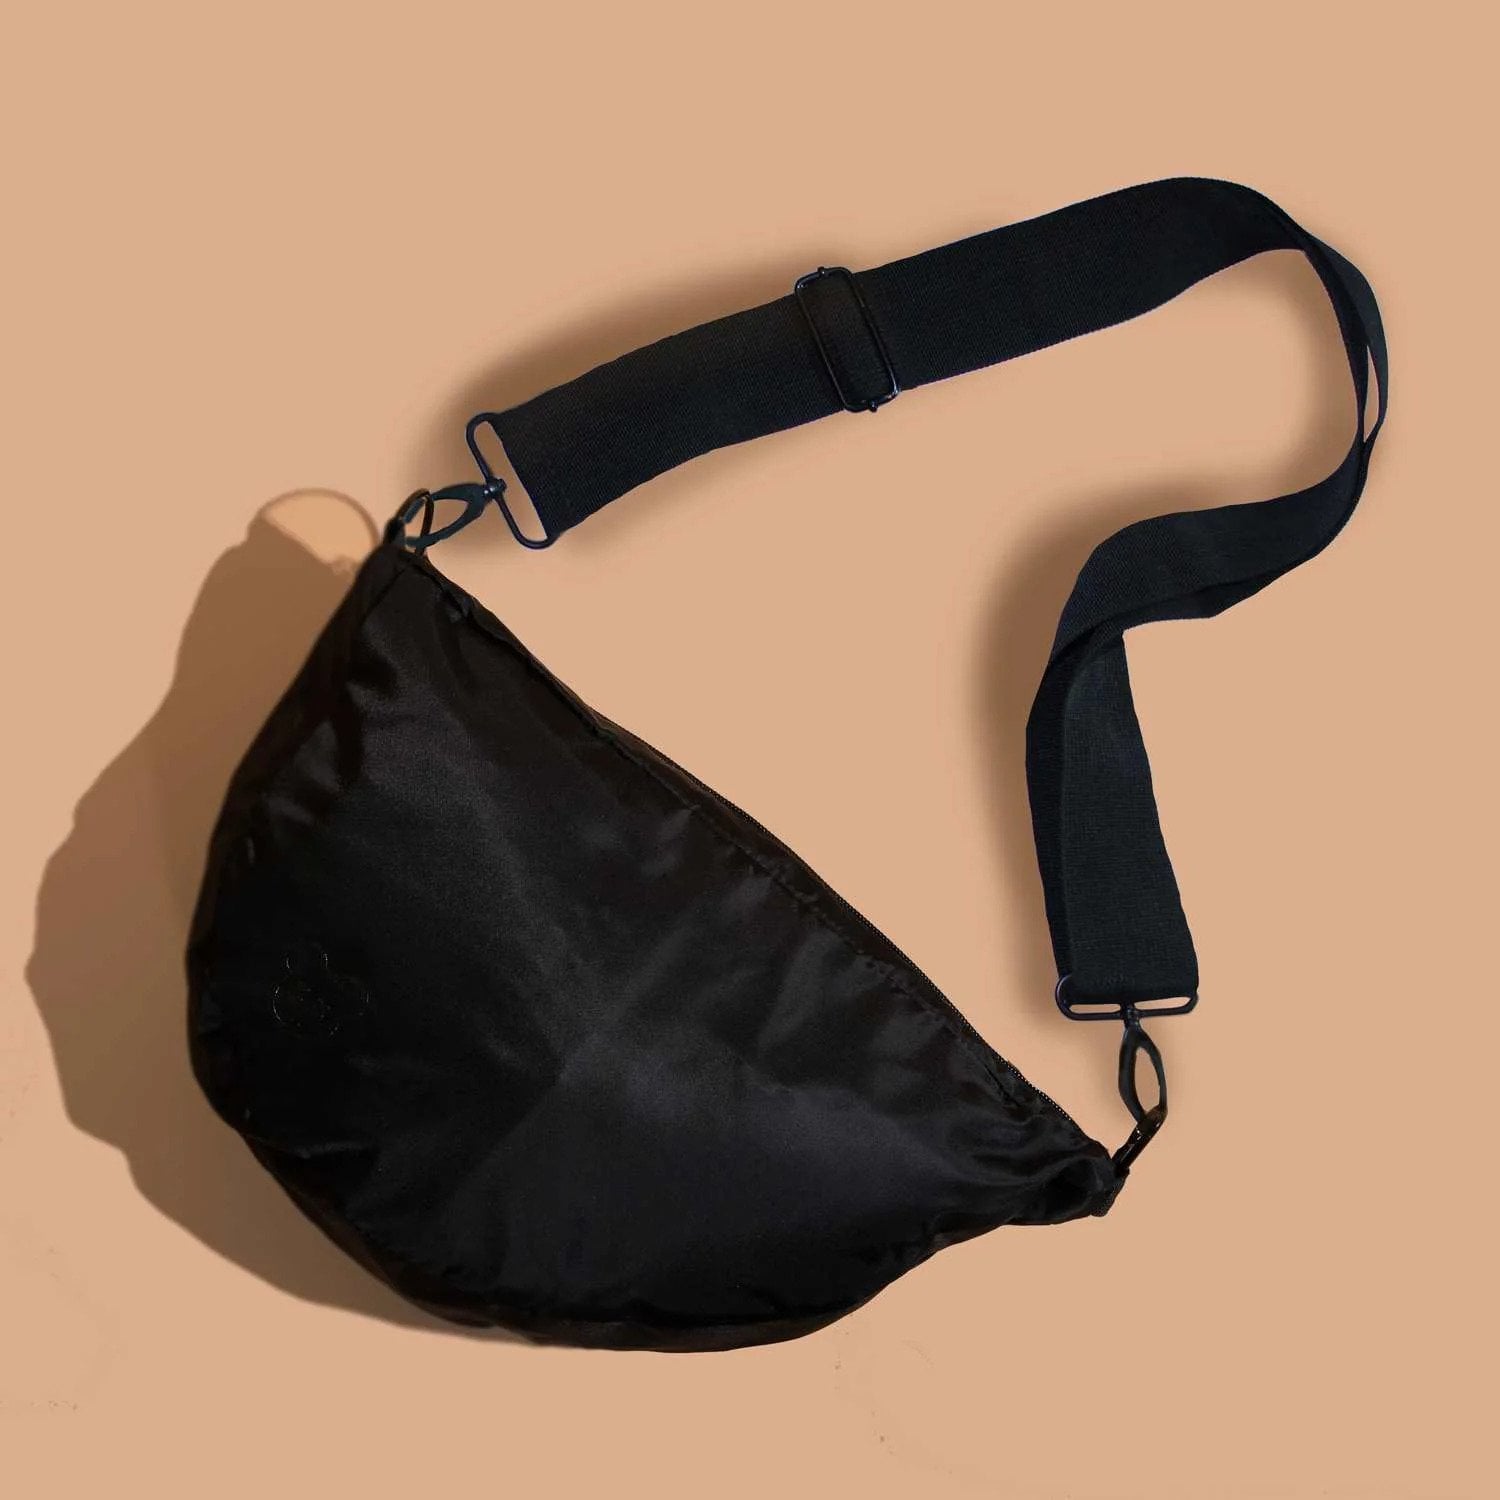 10 Best Designer Diaper Bags 2022